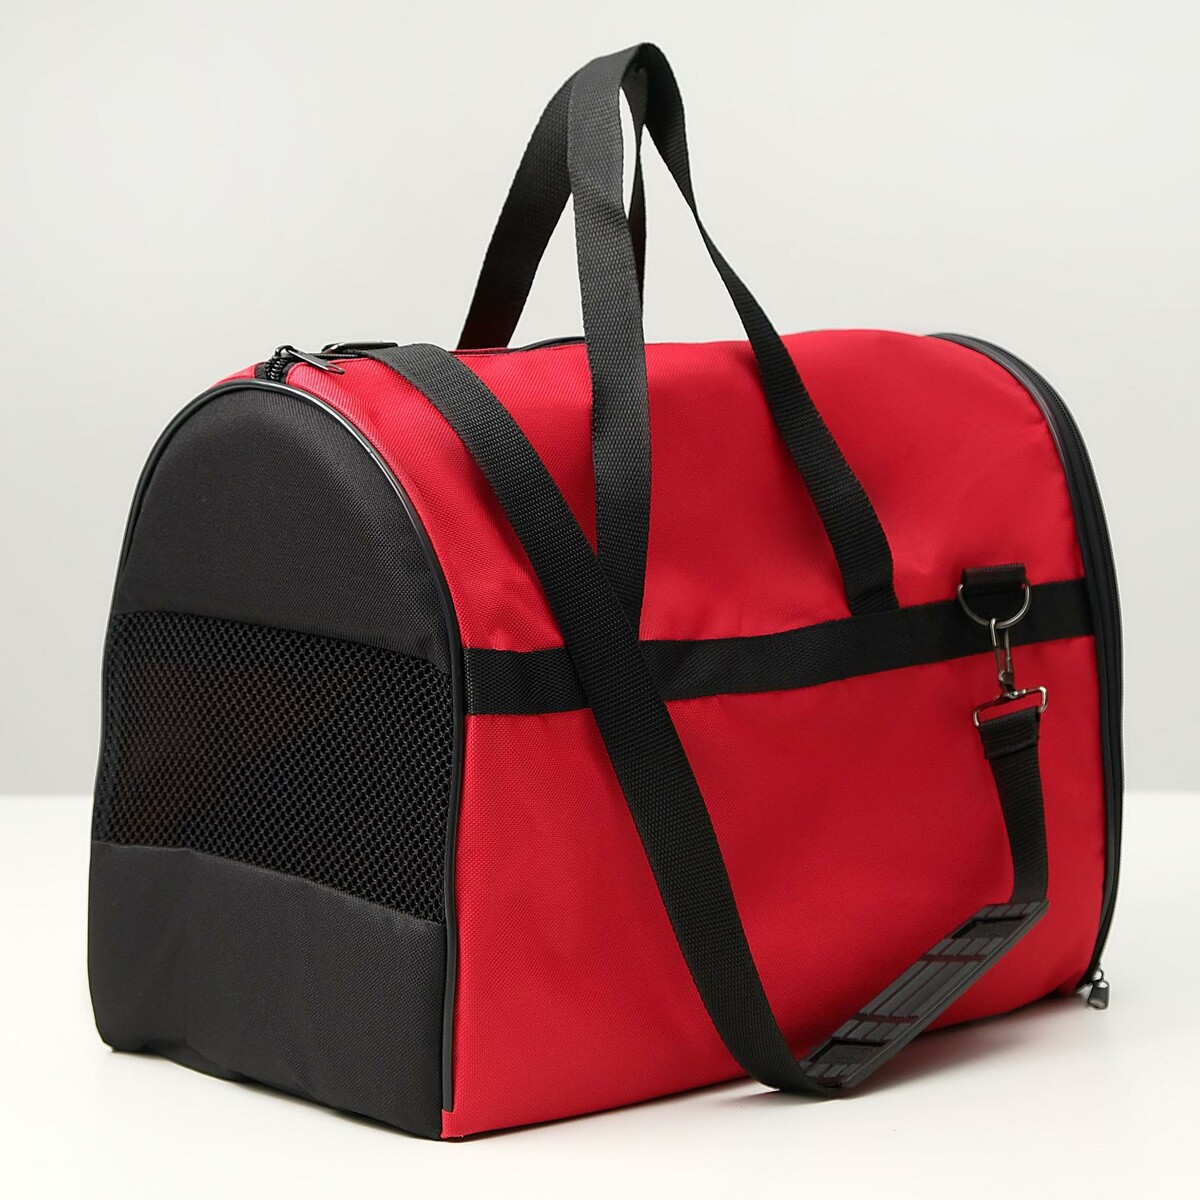 Сумка - переноска для животных сумка переноска для животных оксфорд 36 х 17 х 25 см красная